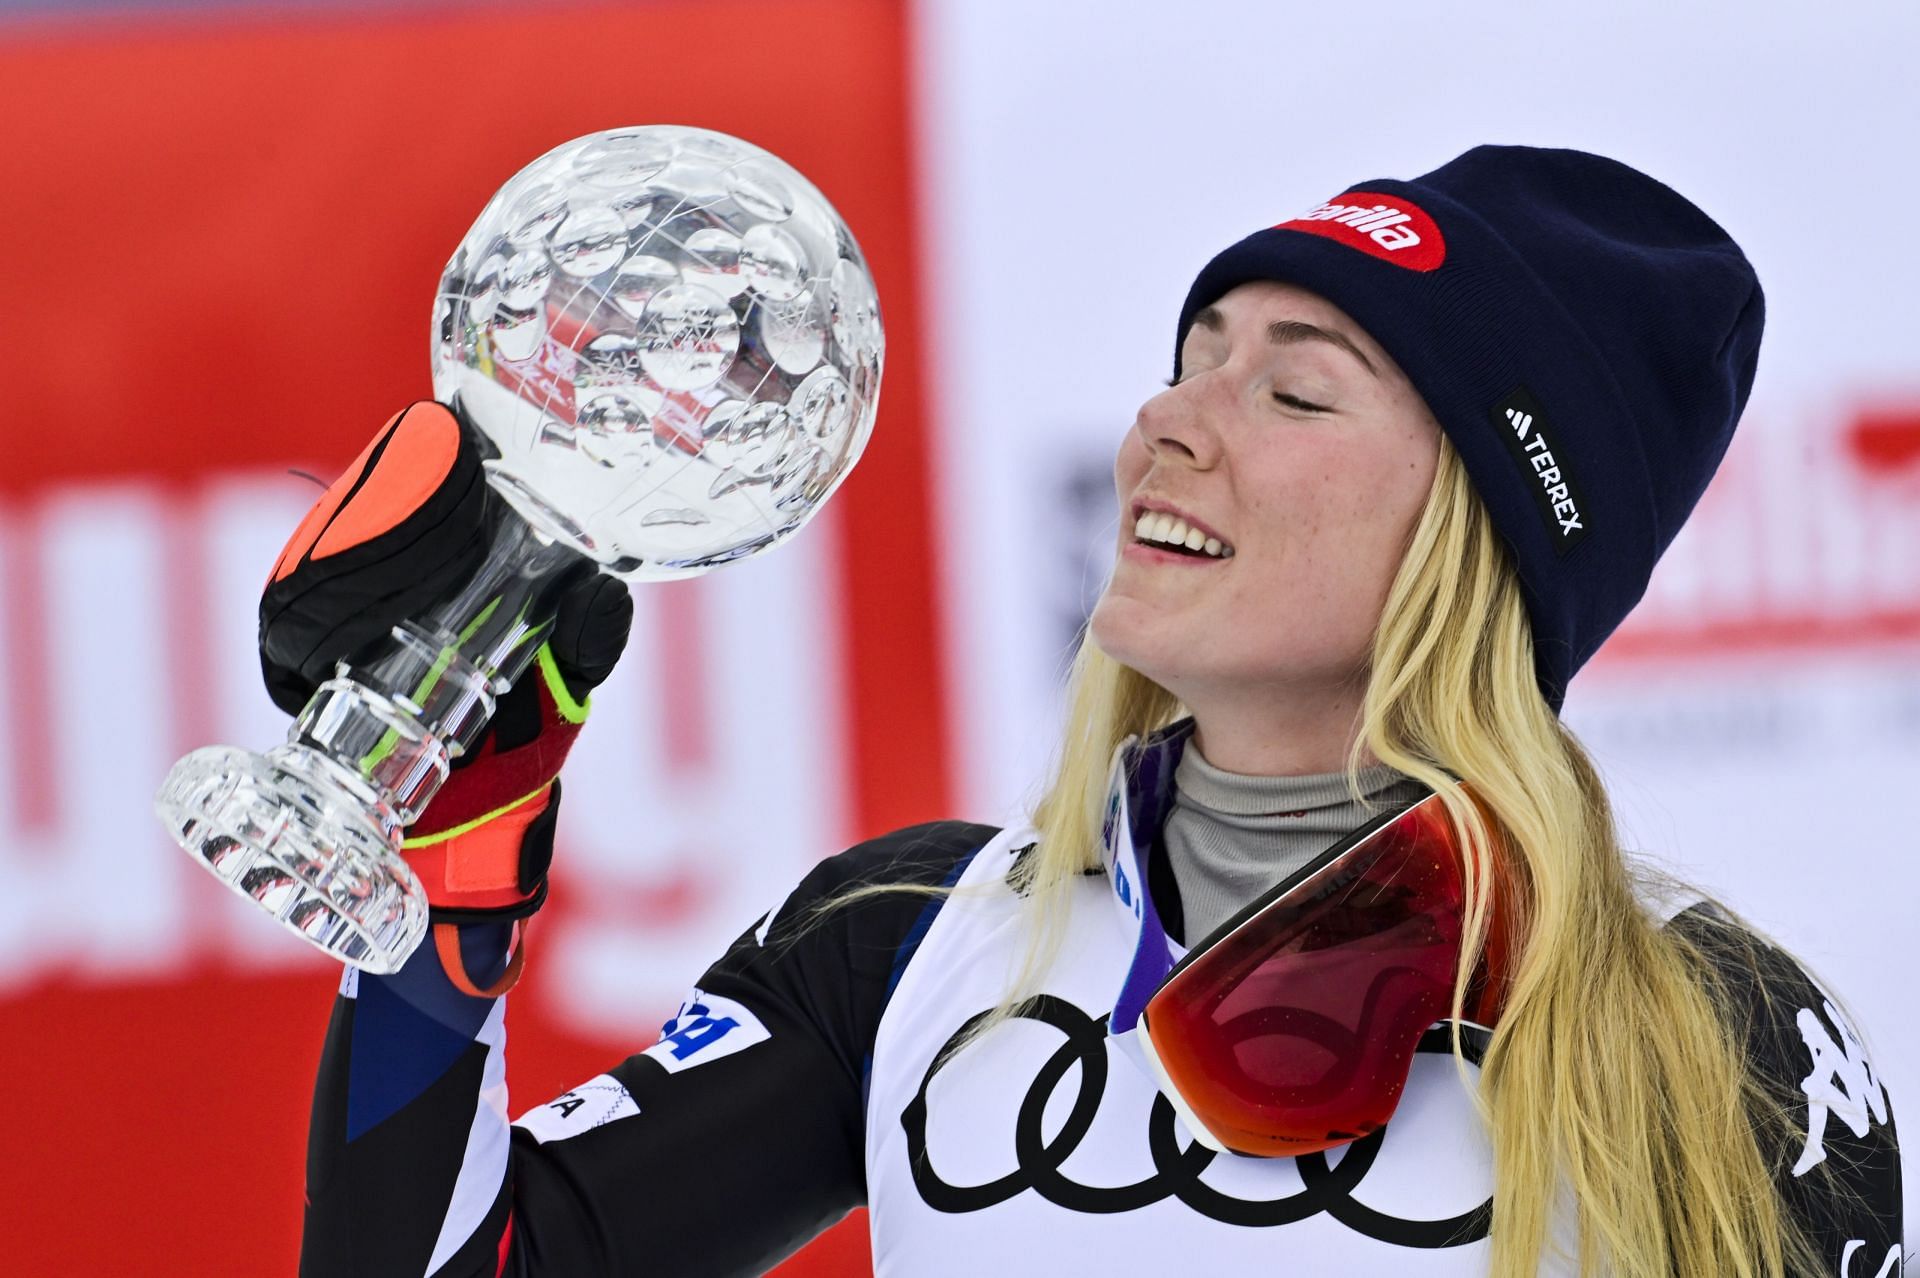 Audi FIS Alpine Ski World Cup Finals - Women